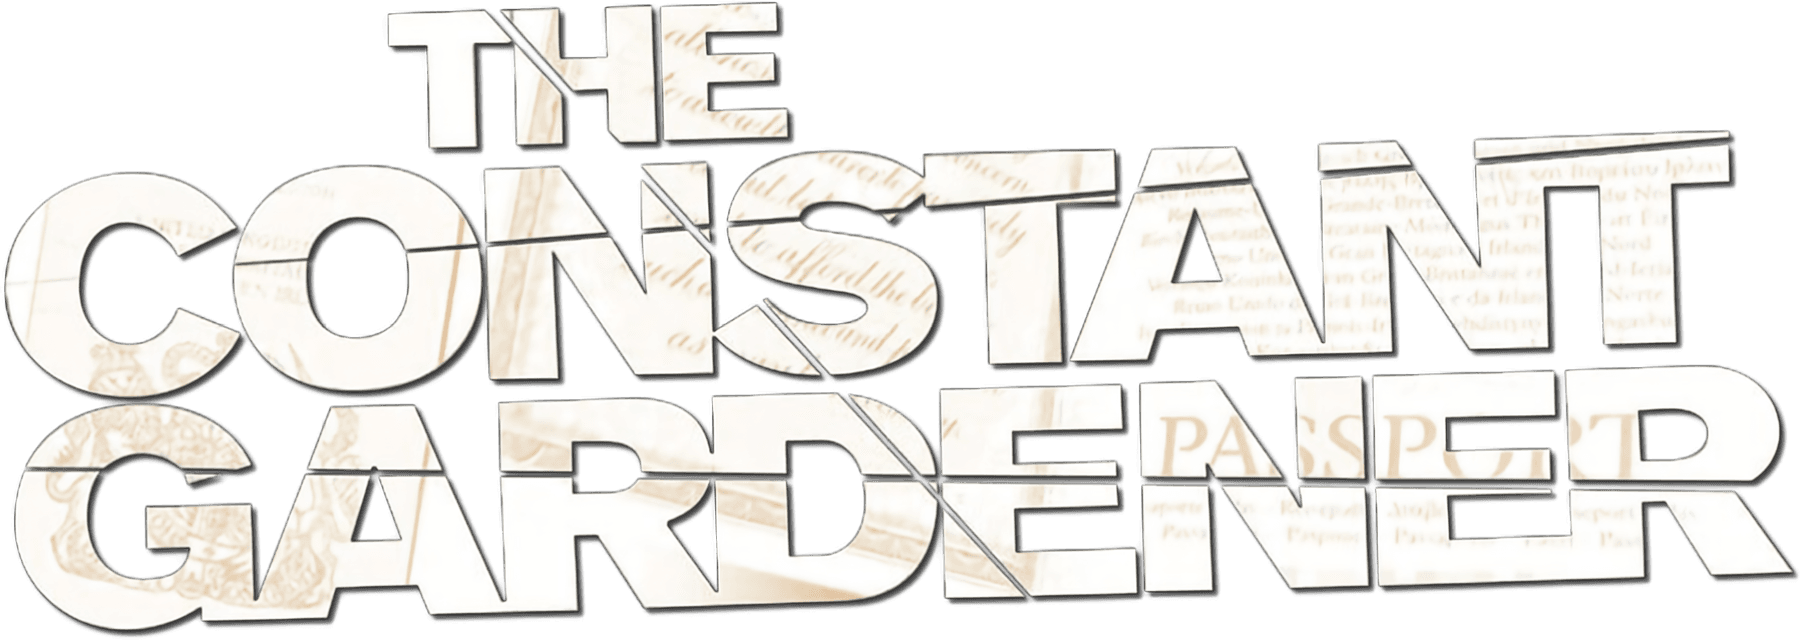 The Constant Gardener logo